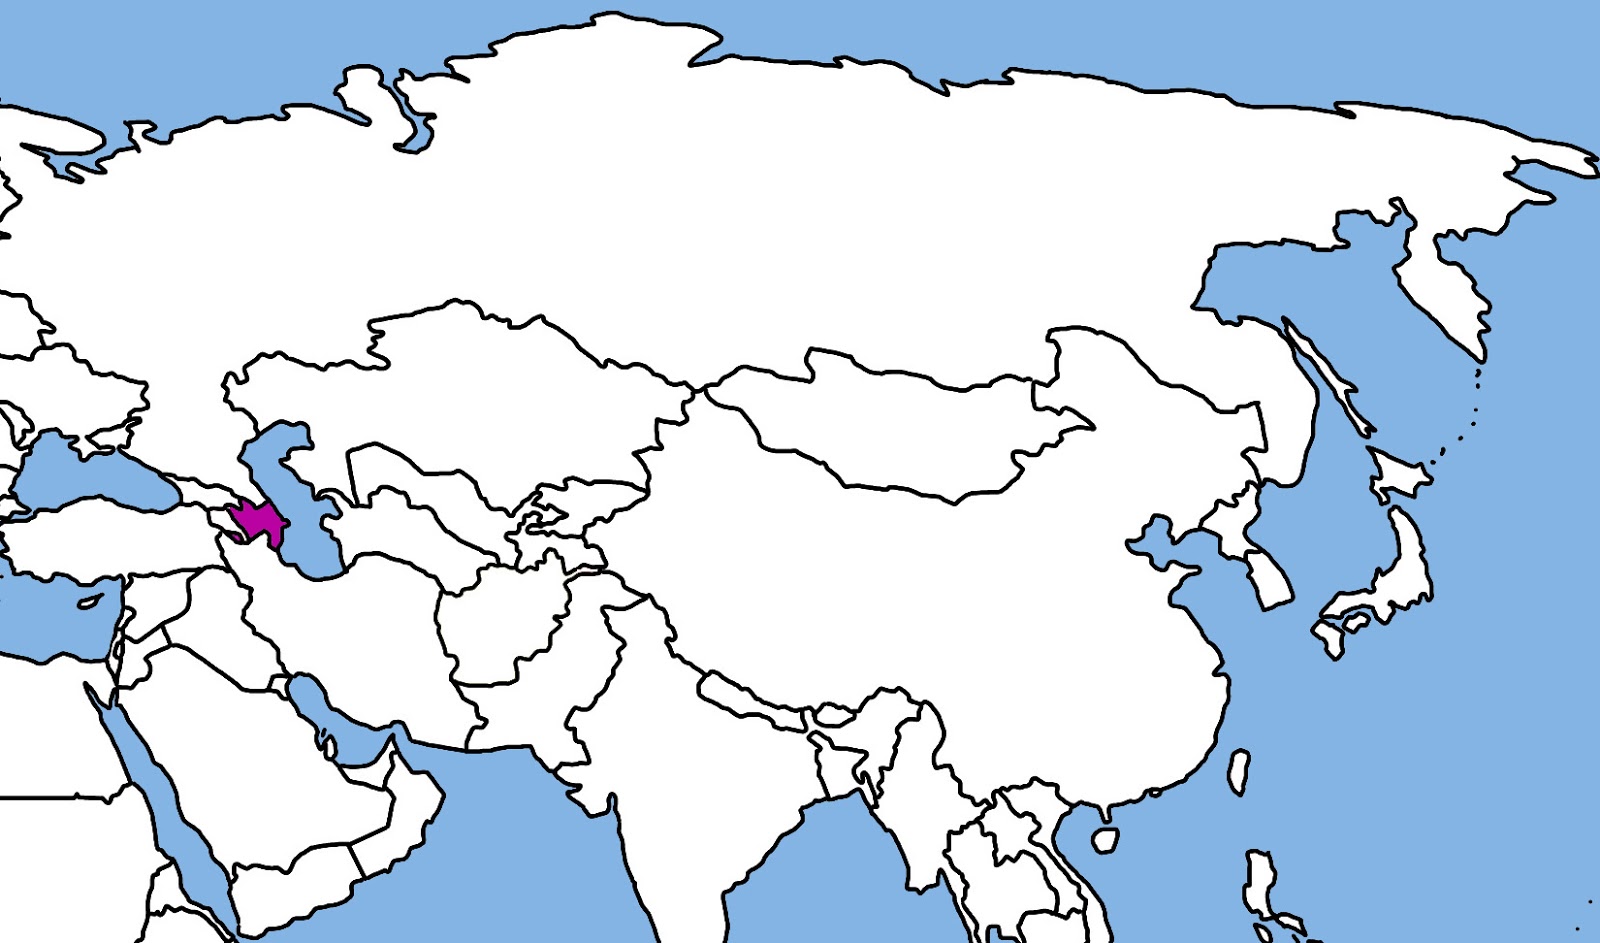 White asia. Карта Азии без границ для маппинга. Политическая карта Азии пустая. Пустая карта Евразии с границами государств. Карта Азии белая.